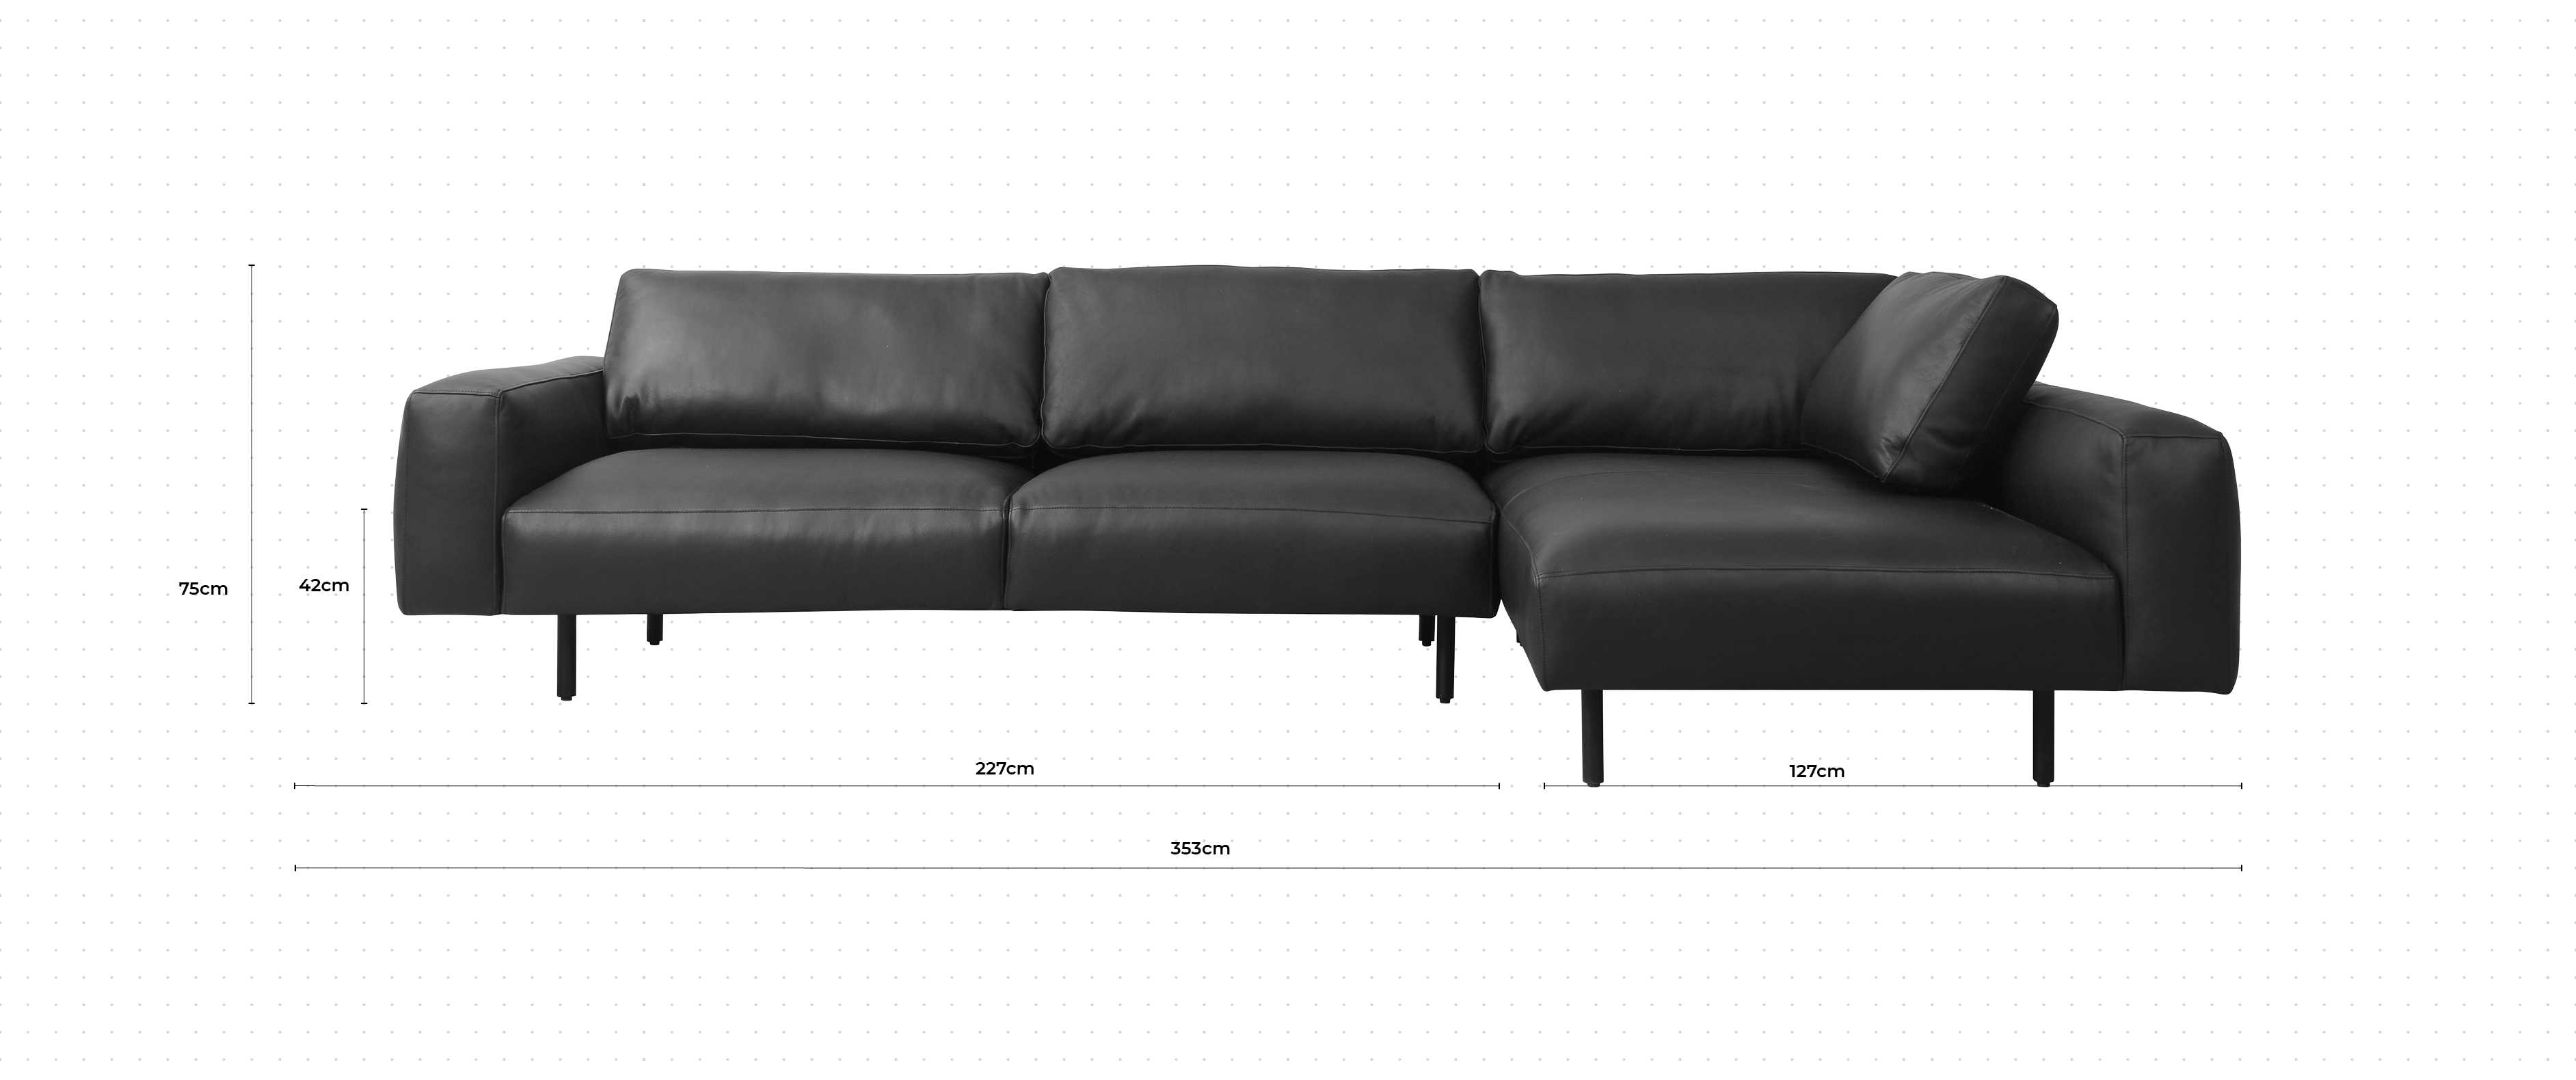 Nougat Large Chaise Sofa RHF dimensions